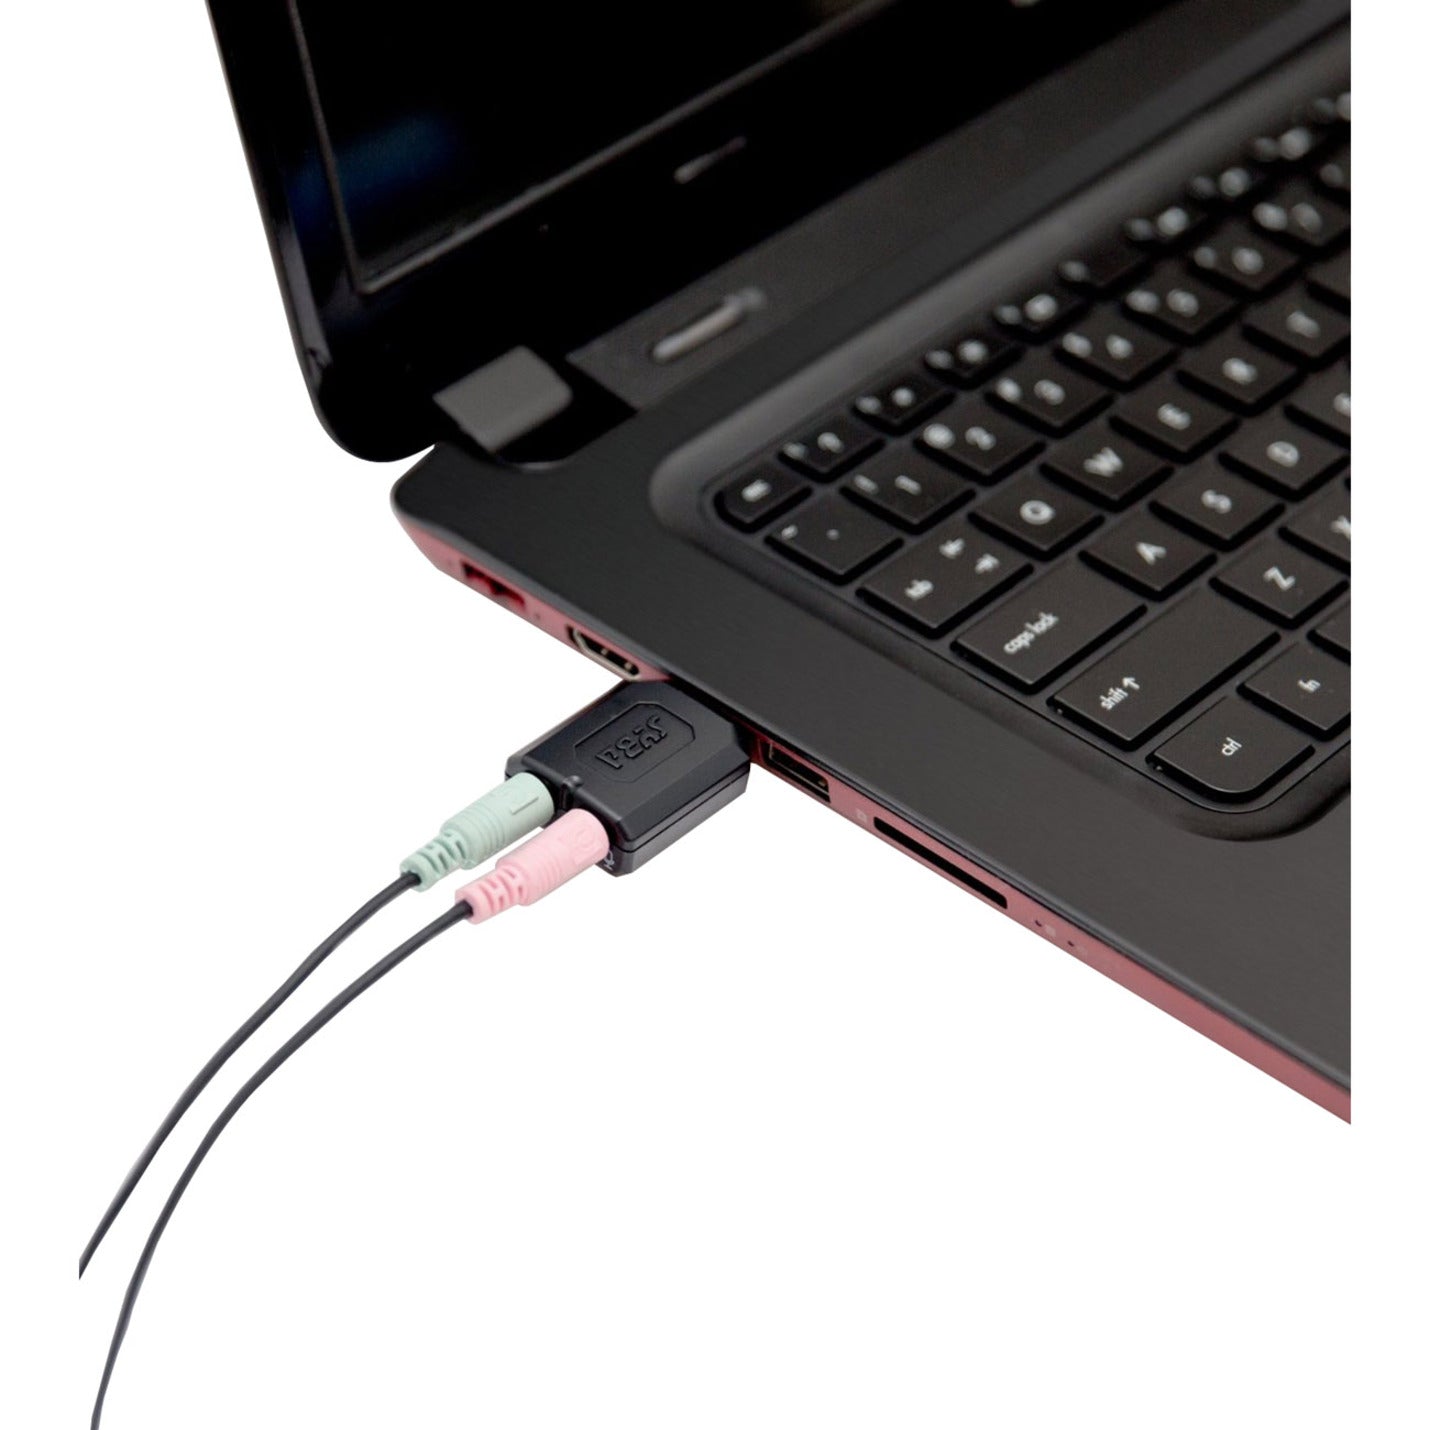 SYBA Multimedia SD-CM-UAUD USB 2.0 External Stereo Audio Adapter, LED Indicator, 2-way, USB Type A - Male to Mini-phone Stereo Audio - Female